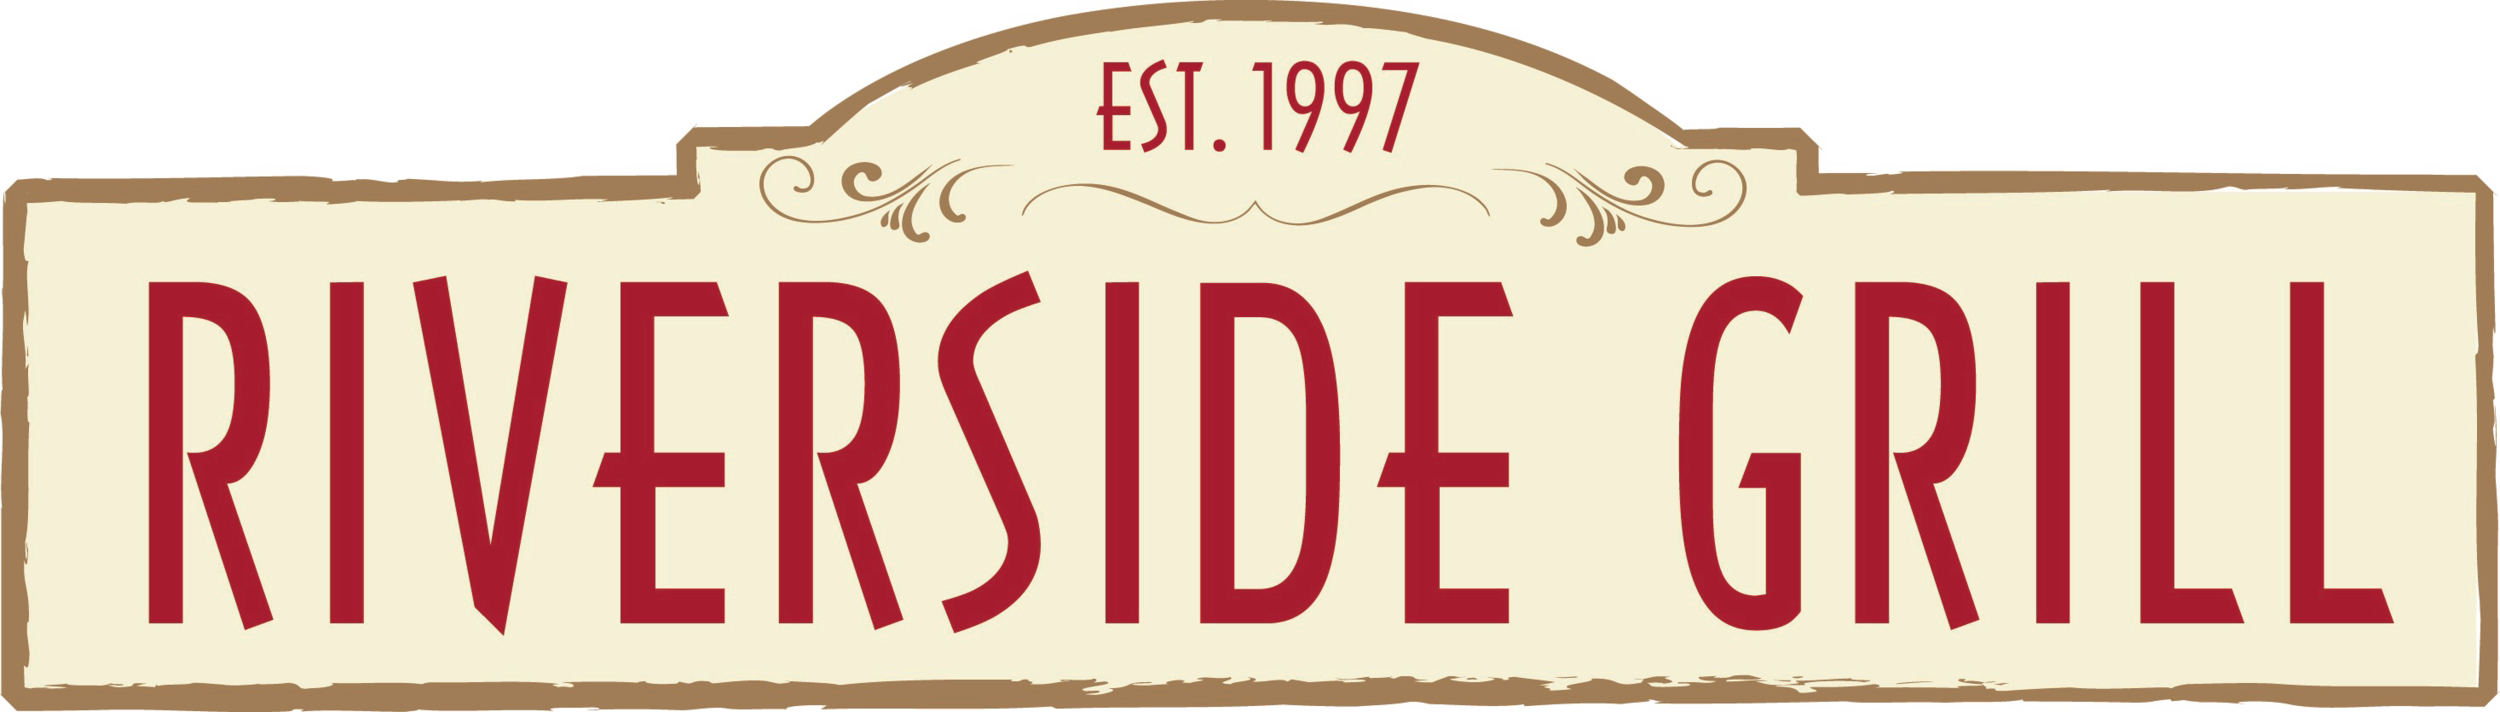 Riverside-Grill-Logo_PNG.png